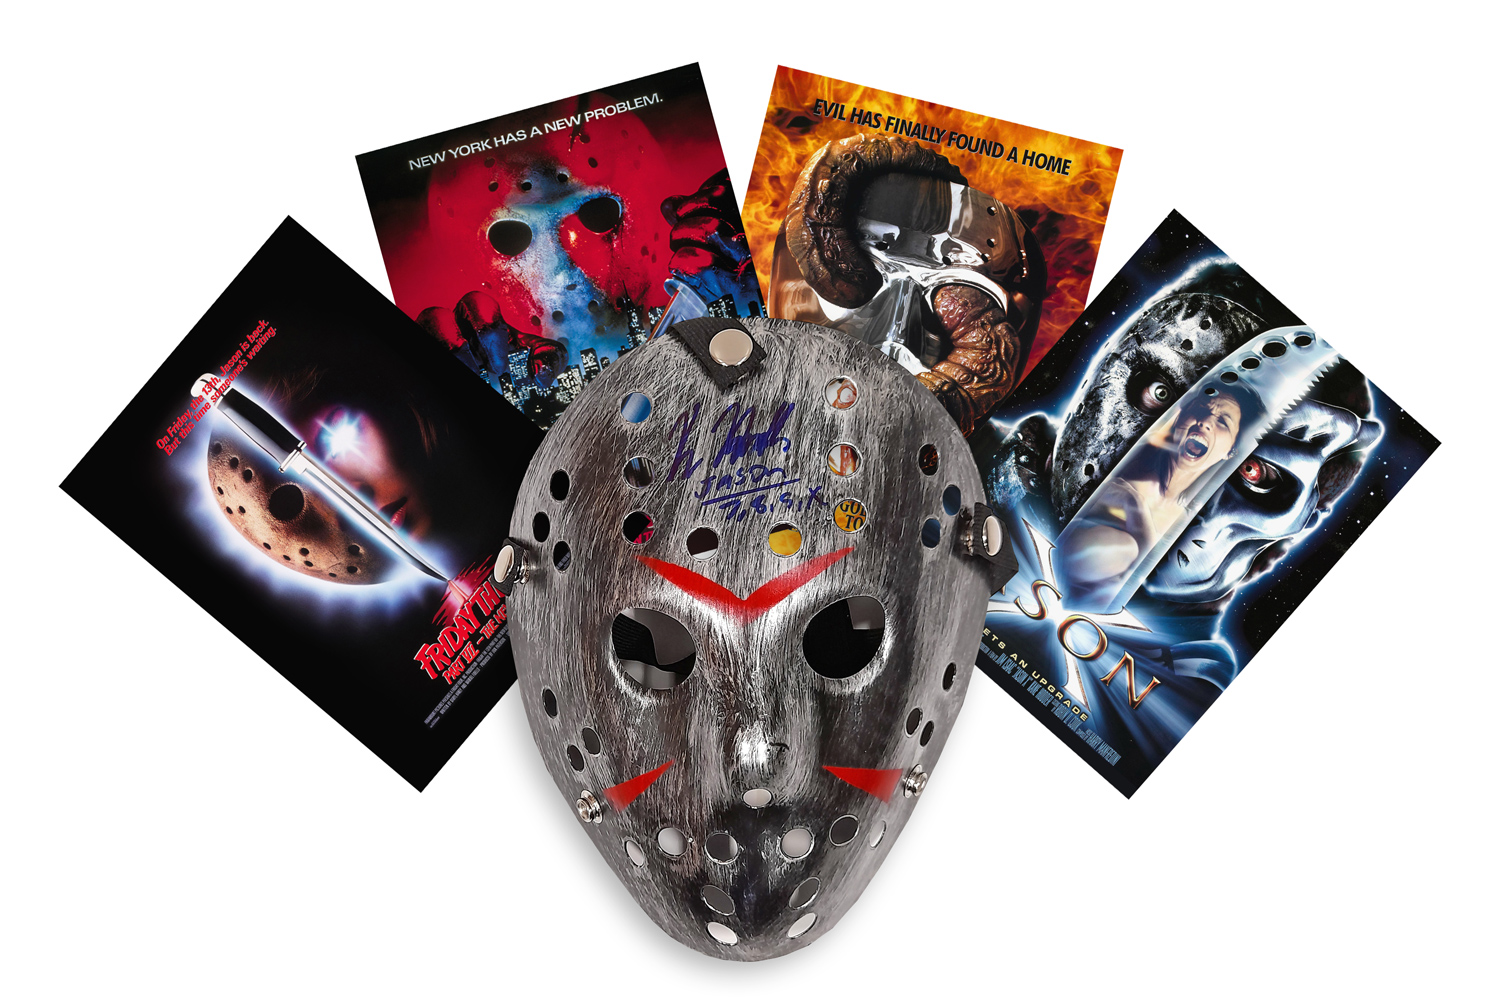 SALE! Kane Hodder Friday 13th hand-signed Jason Voorhees mask. Hand-Signed by Kane Hodder, who